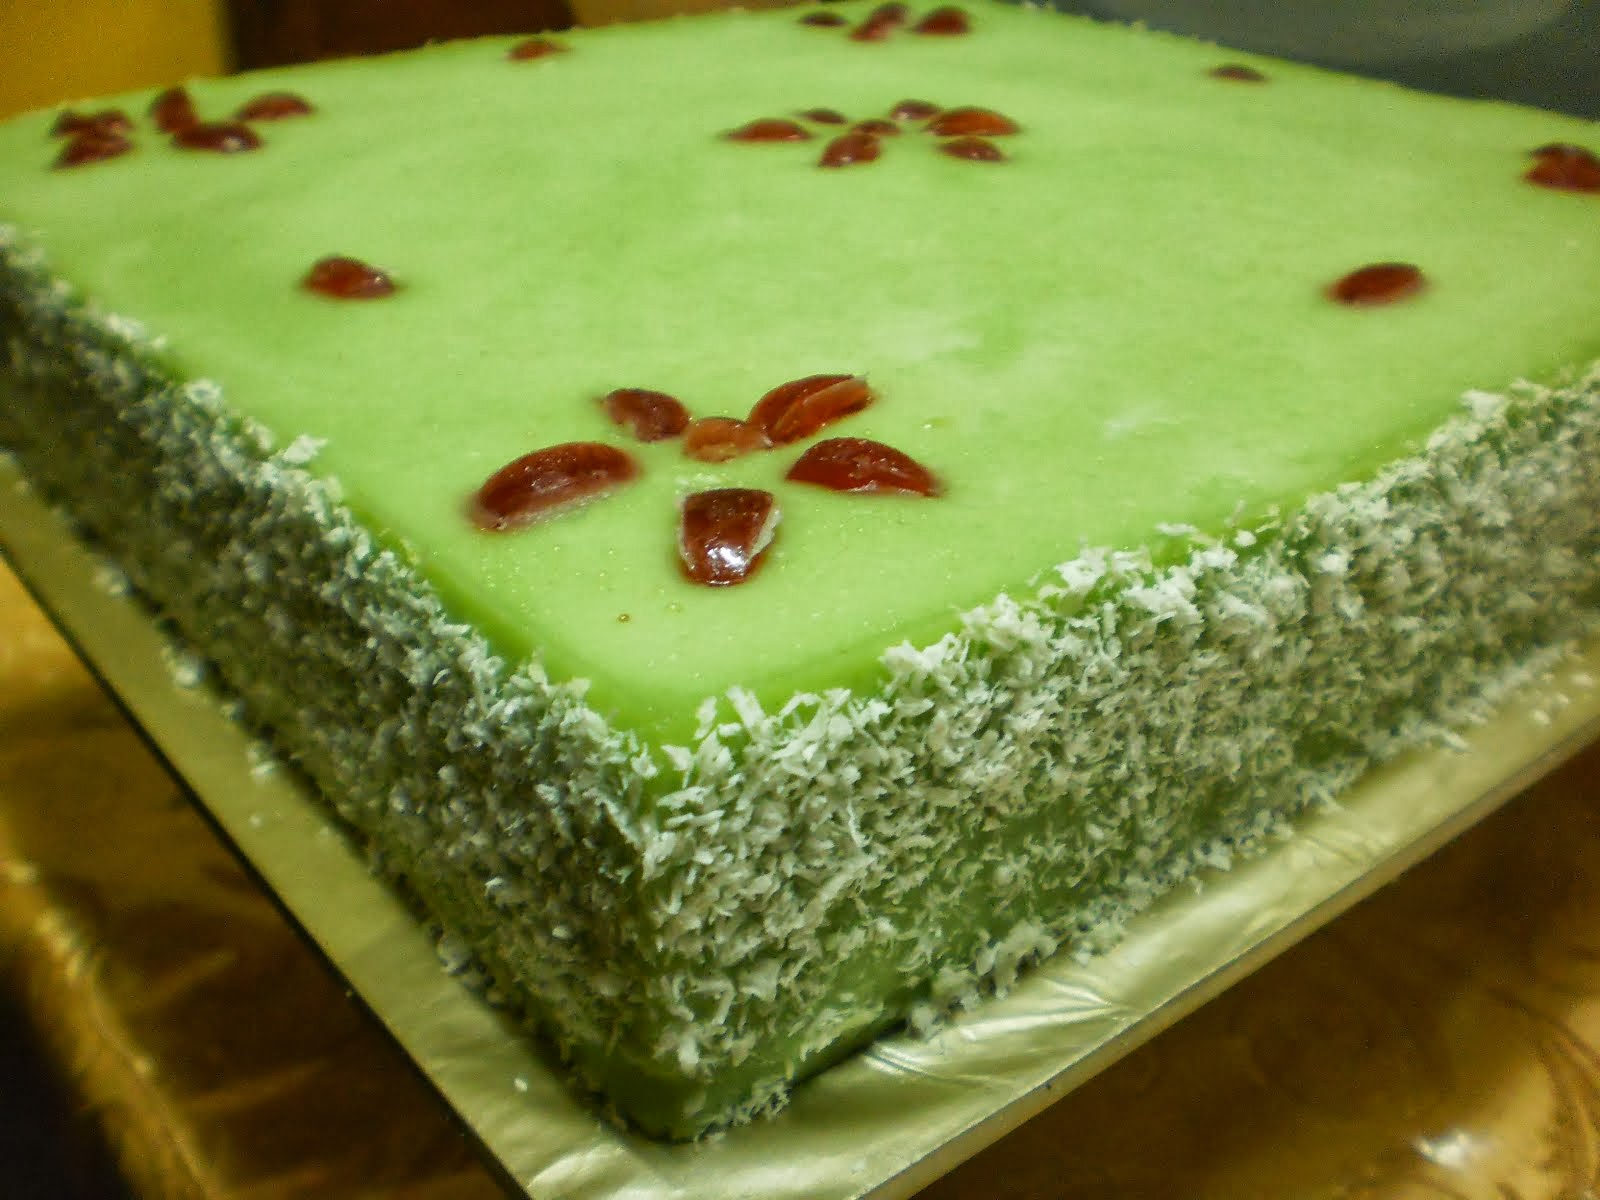 Pandan Layer Cake